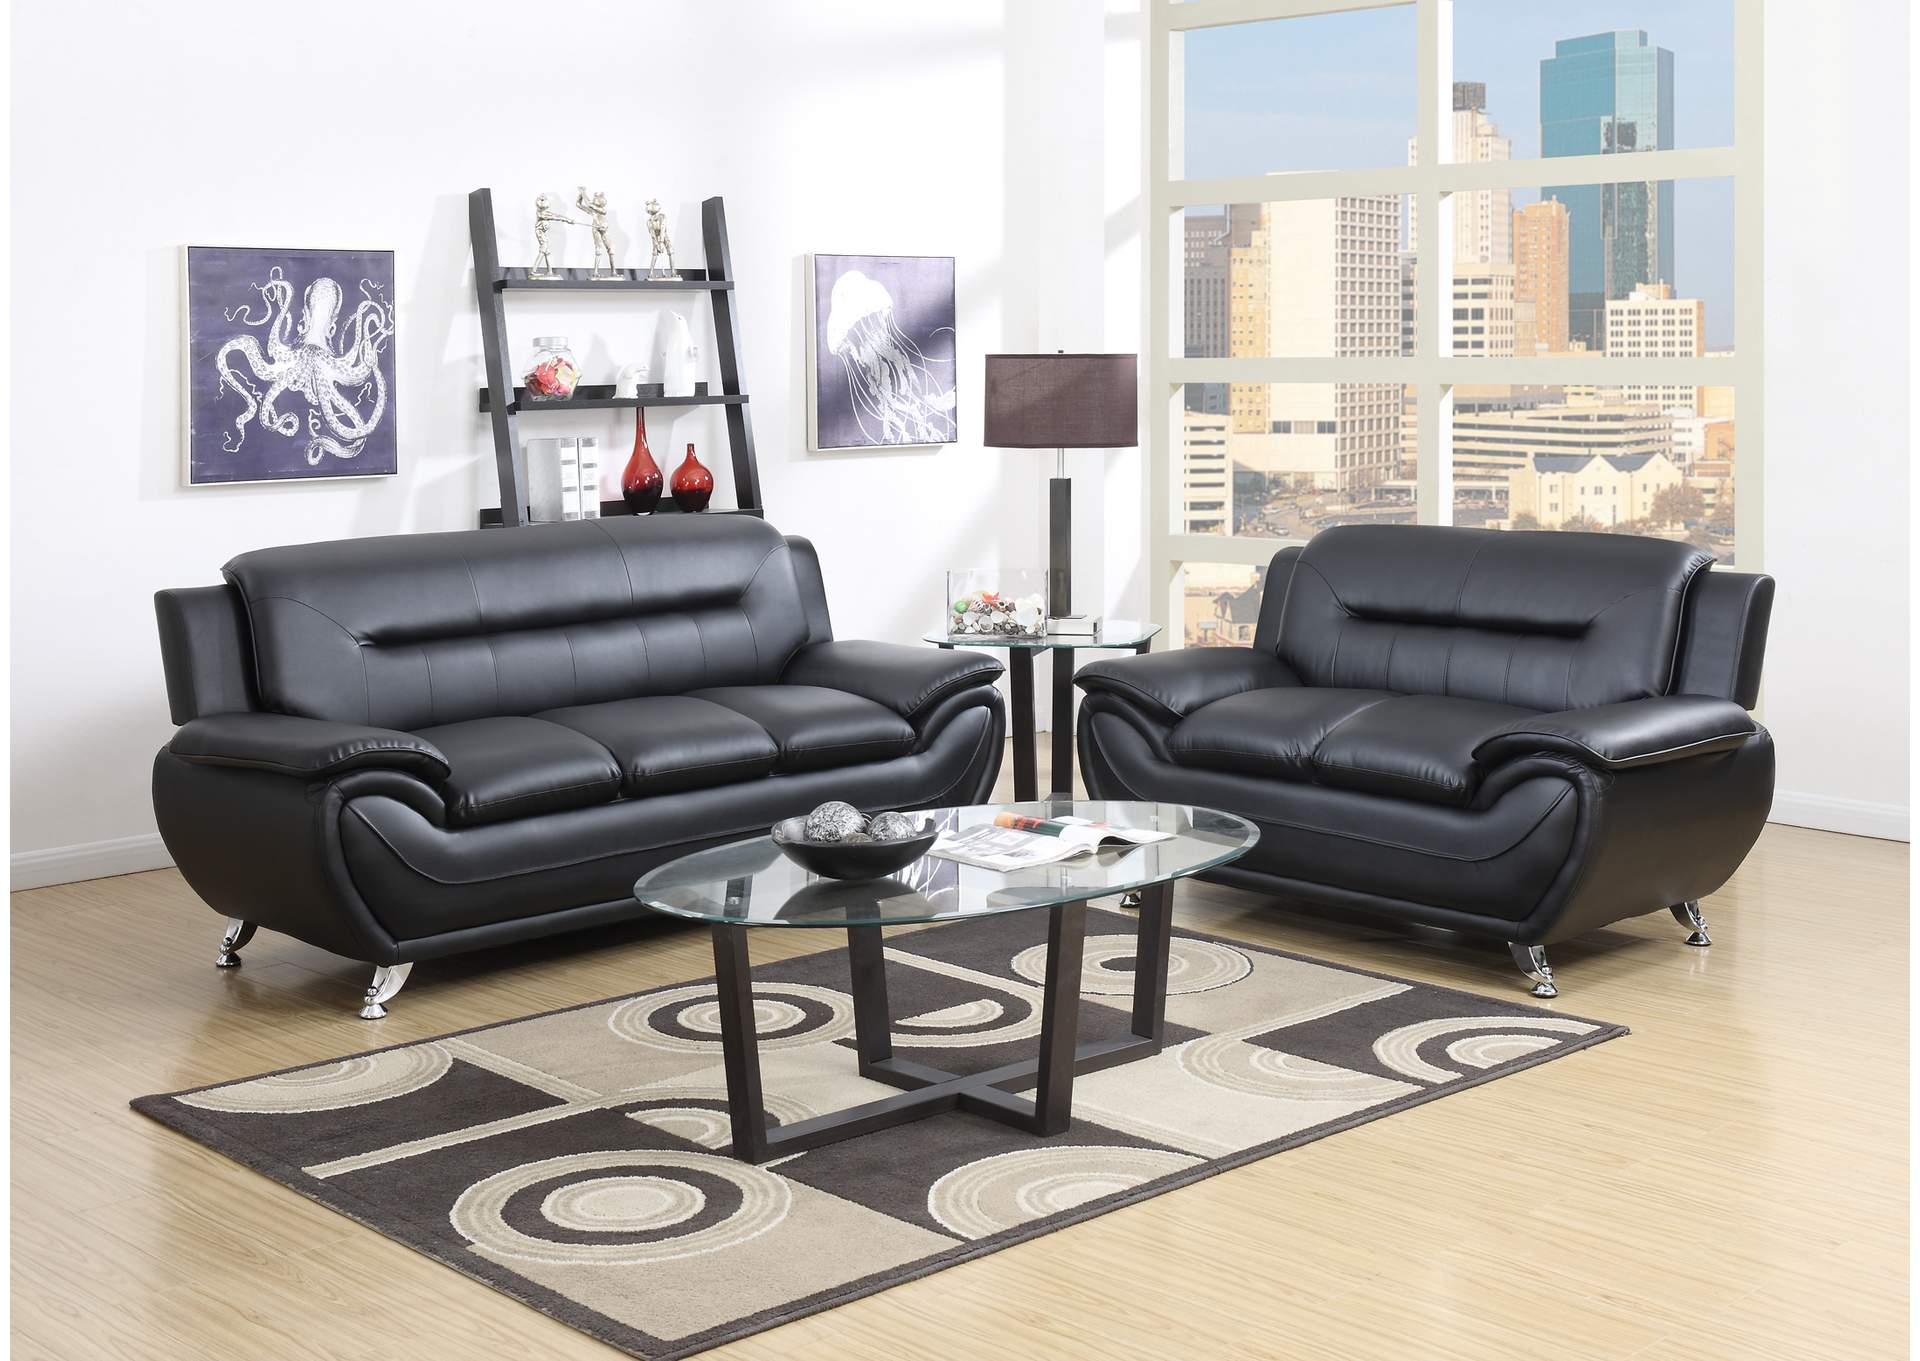 U2701 Black Faux Leather Sofa,Global Trading